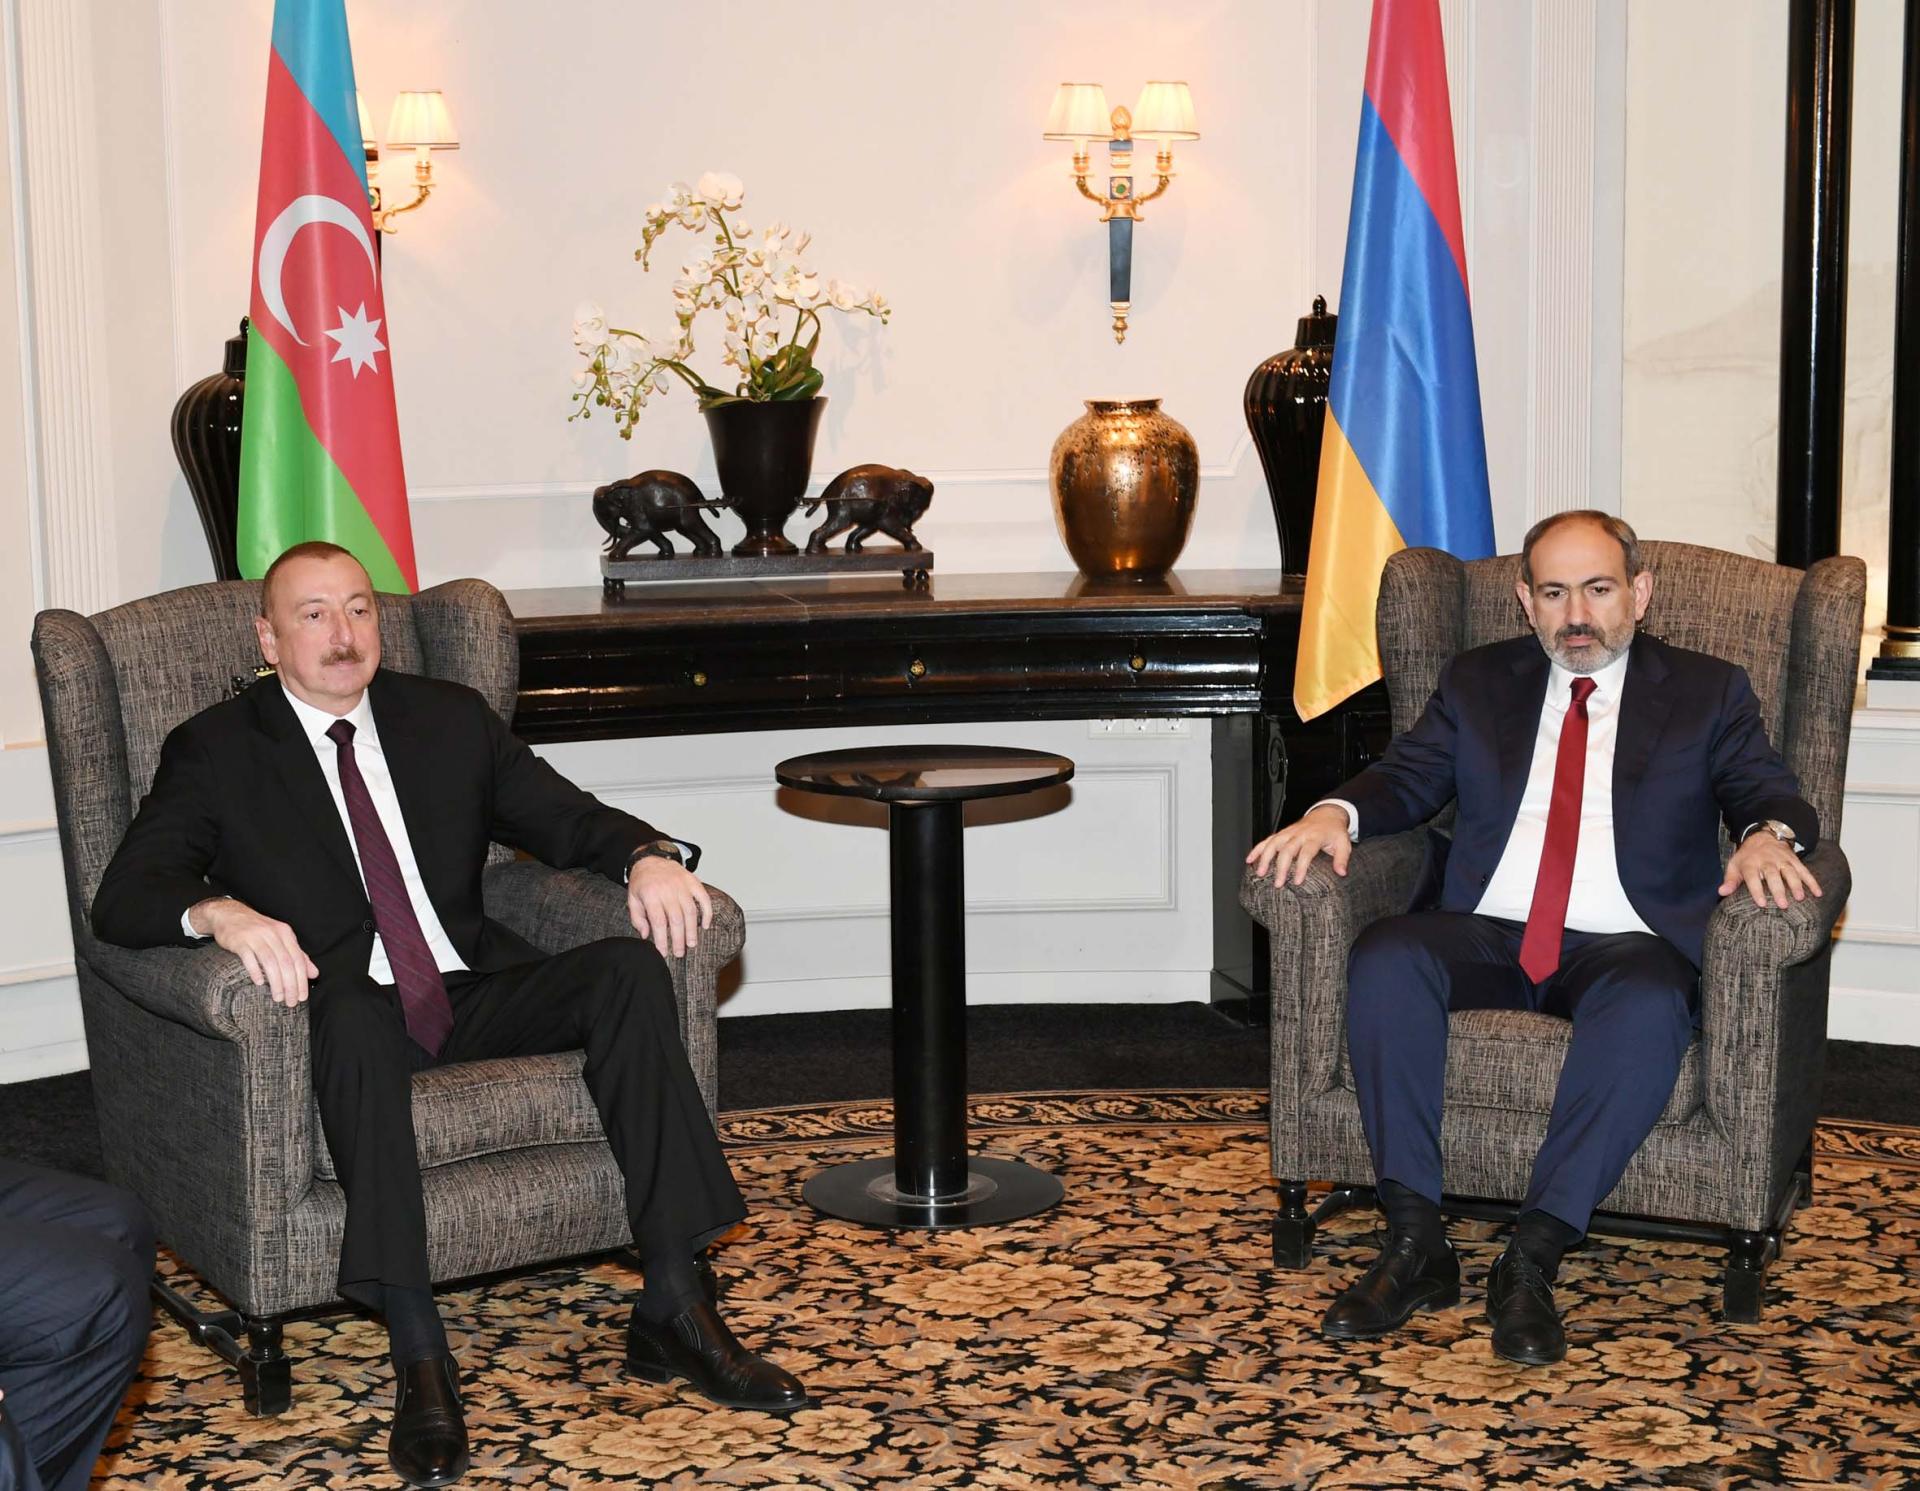 Meeting of Azerbaijani president, Armenian prime minister kicks off